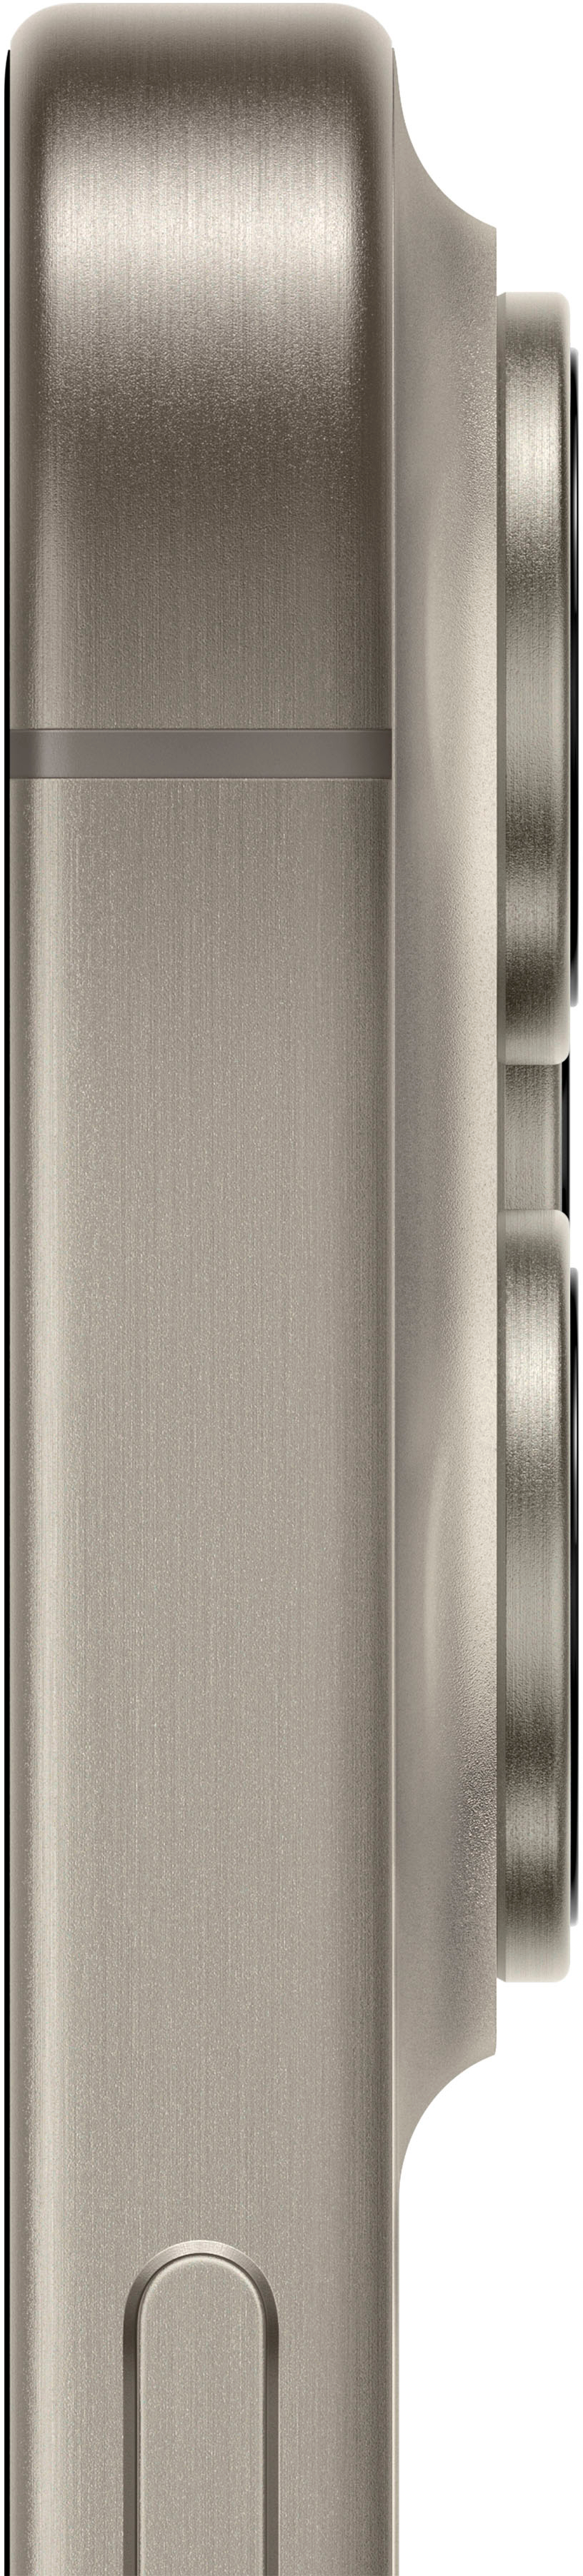 Apple iPhone 15 Pro Max 1TB White Titanium (AT&T) MU6G3LL/A - Best Buy